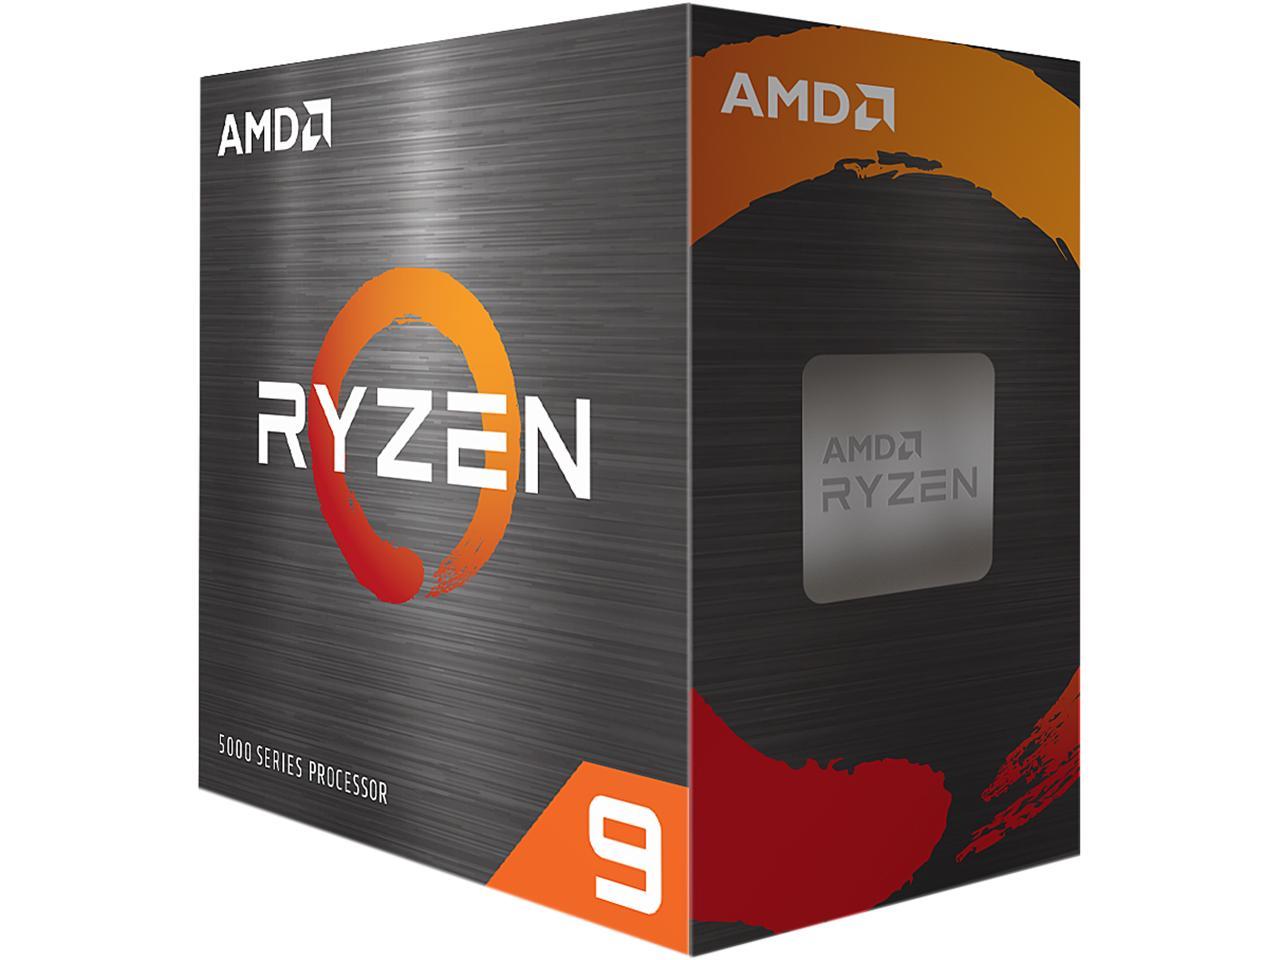 AMD Ryzen 9 5900X AM4 105W Desktop Processor CPU $288 + Free Shipping